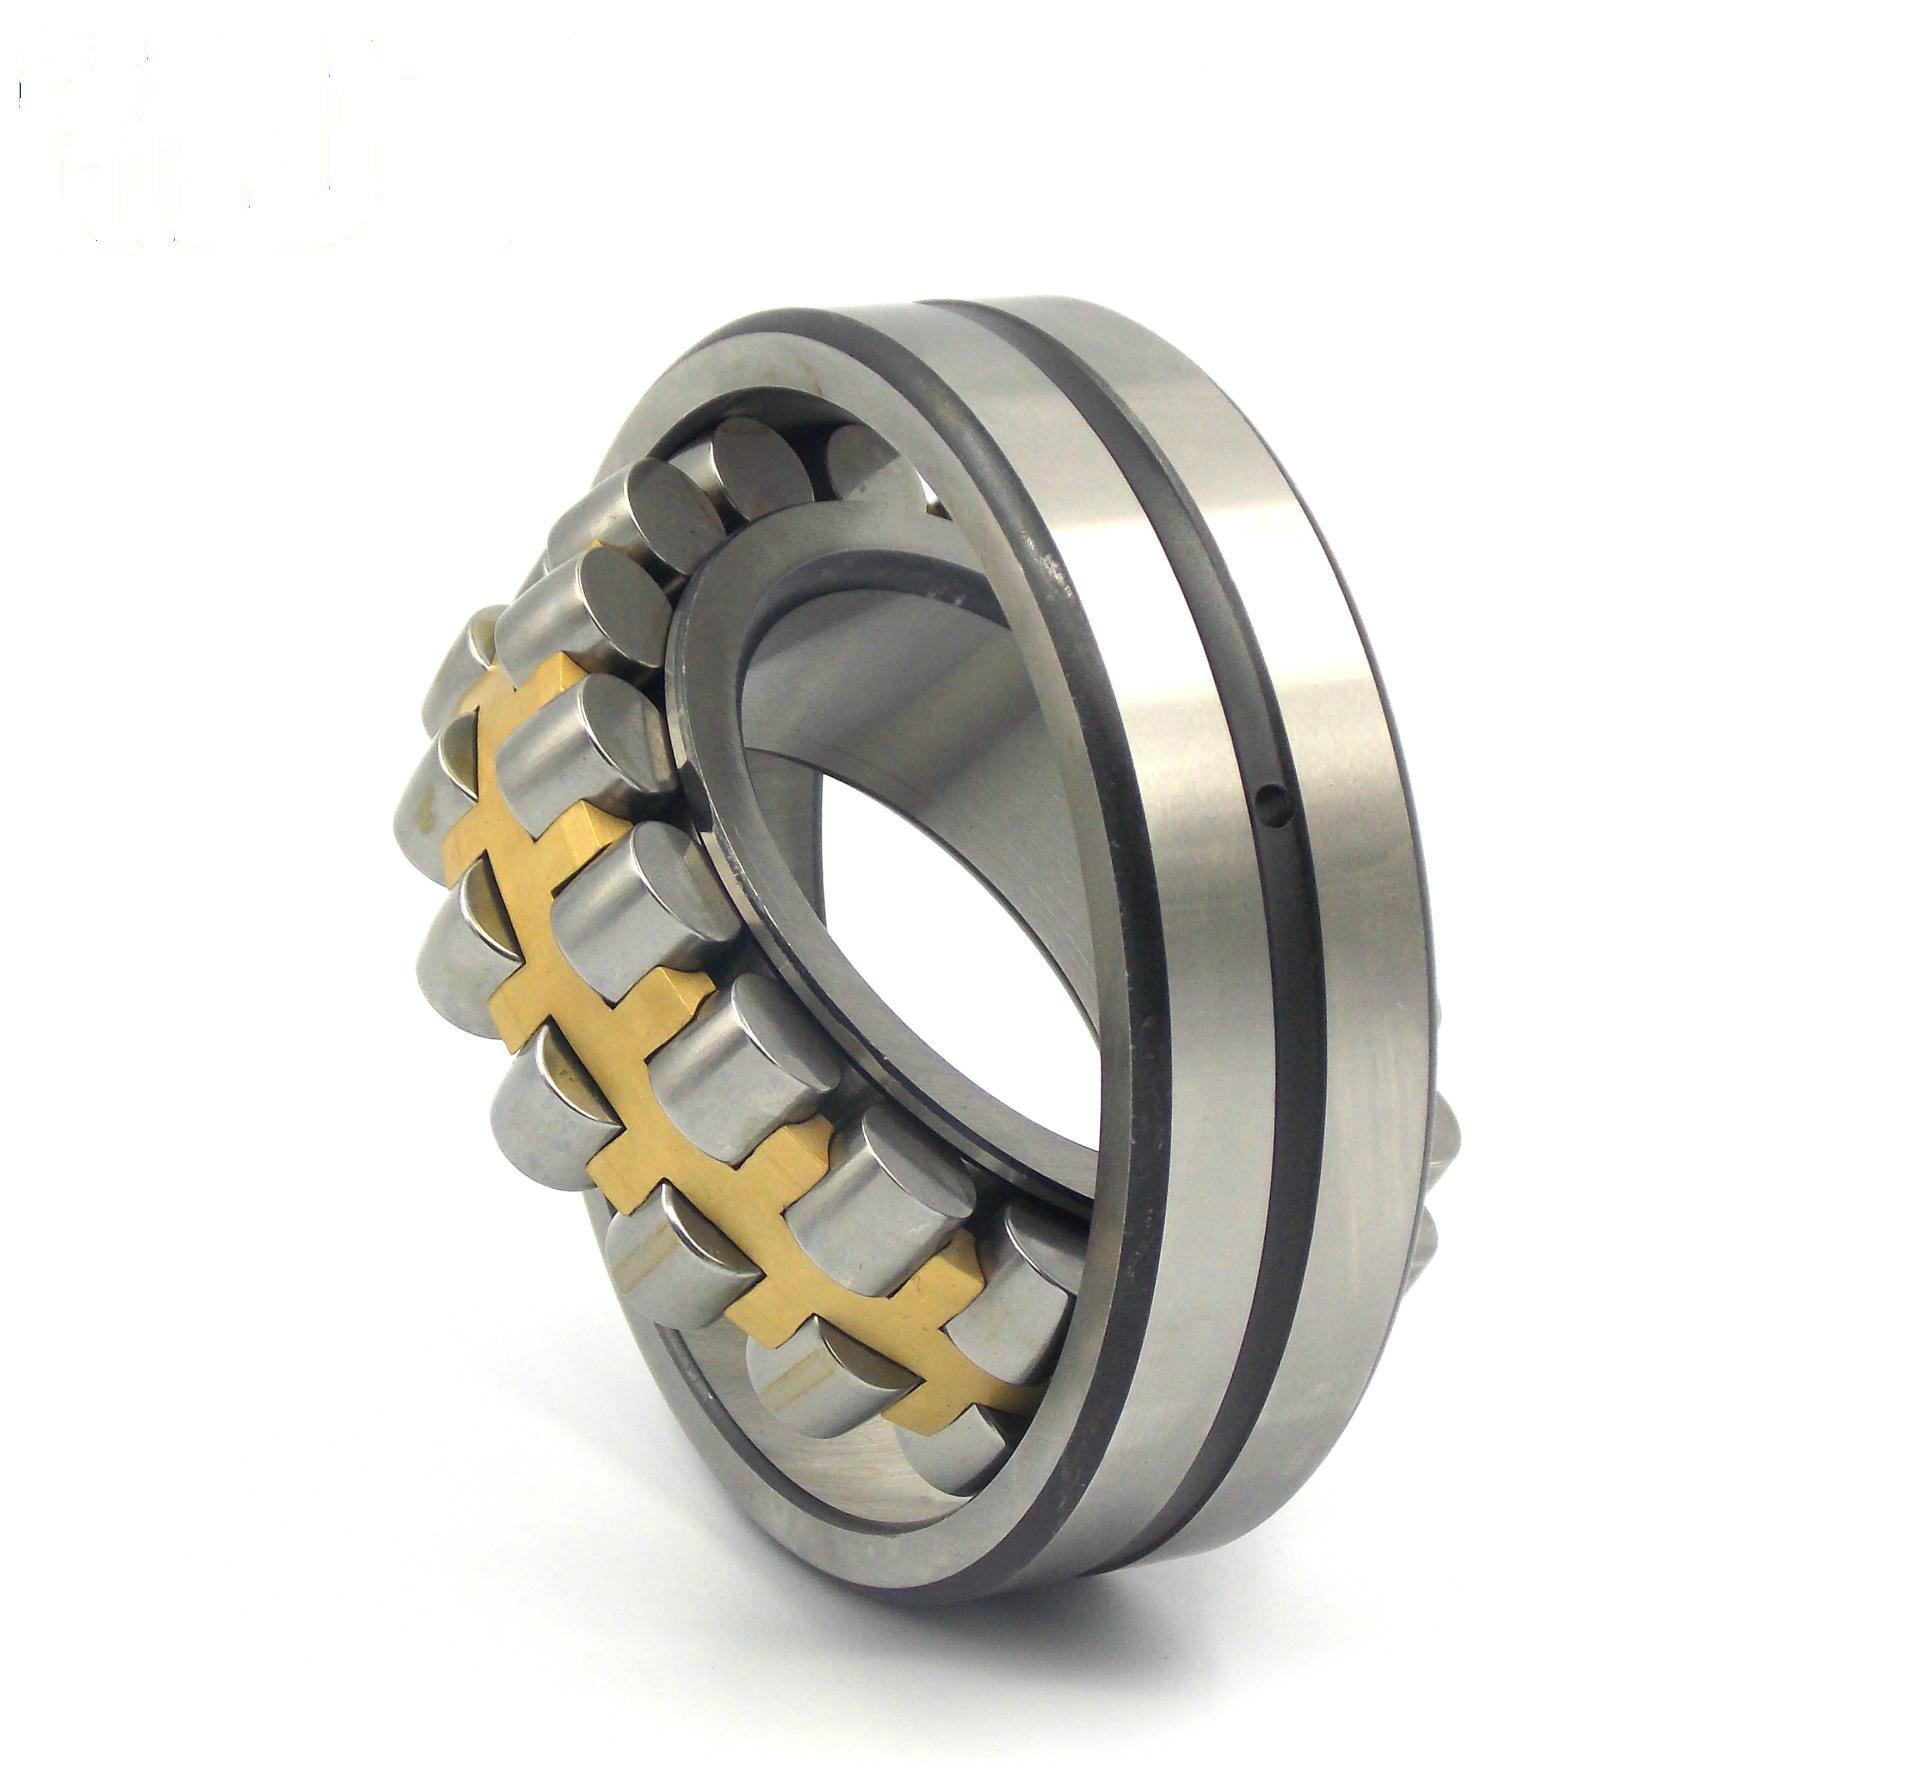  NjJ 1026 M Cylindrical roller bearing